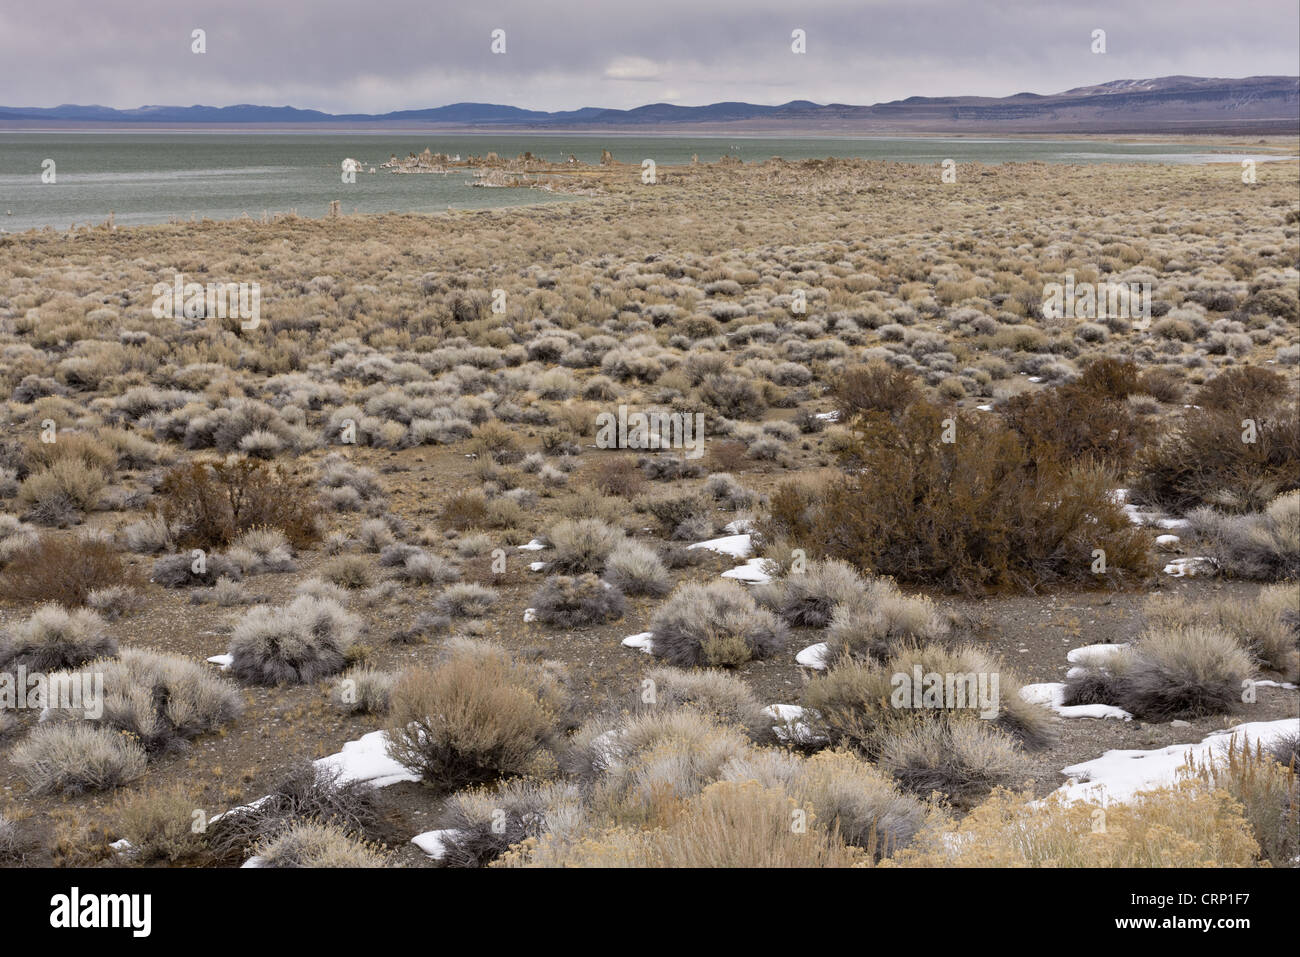 Desert chaparral habitat at edge of saline lake, Mono Lake, Lee Vining, California, U.S.A., february Stock Photo